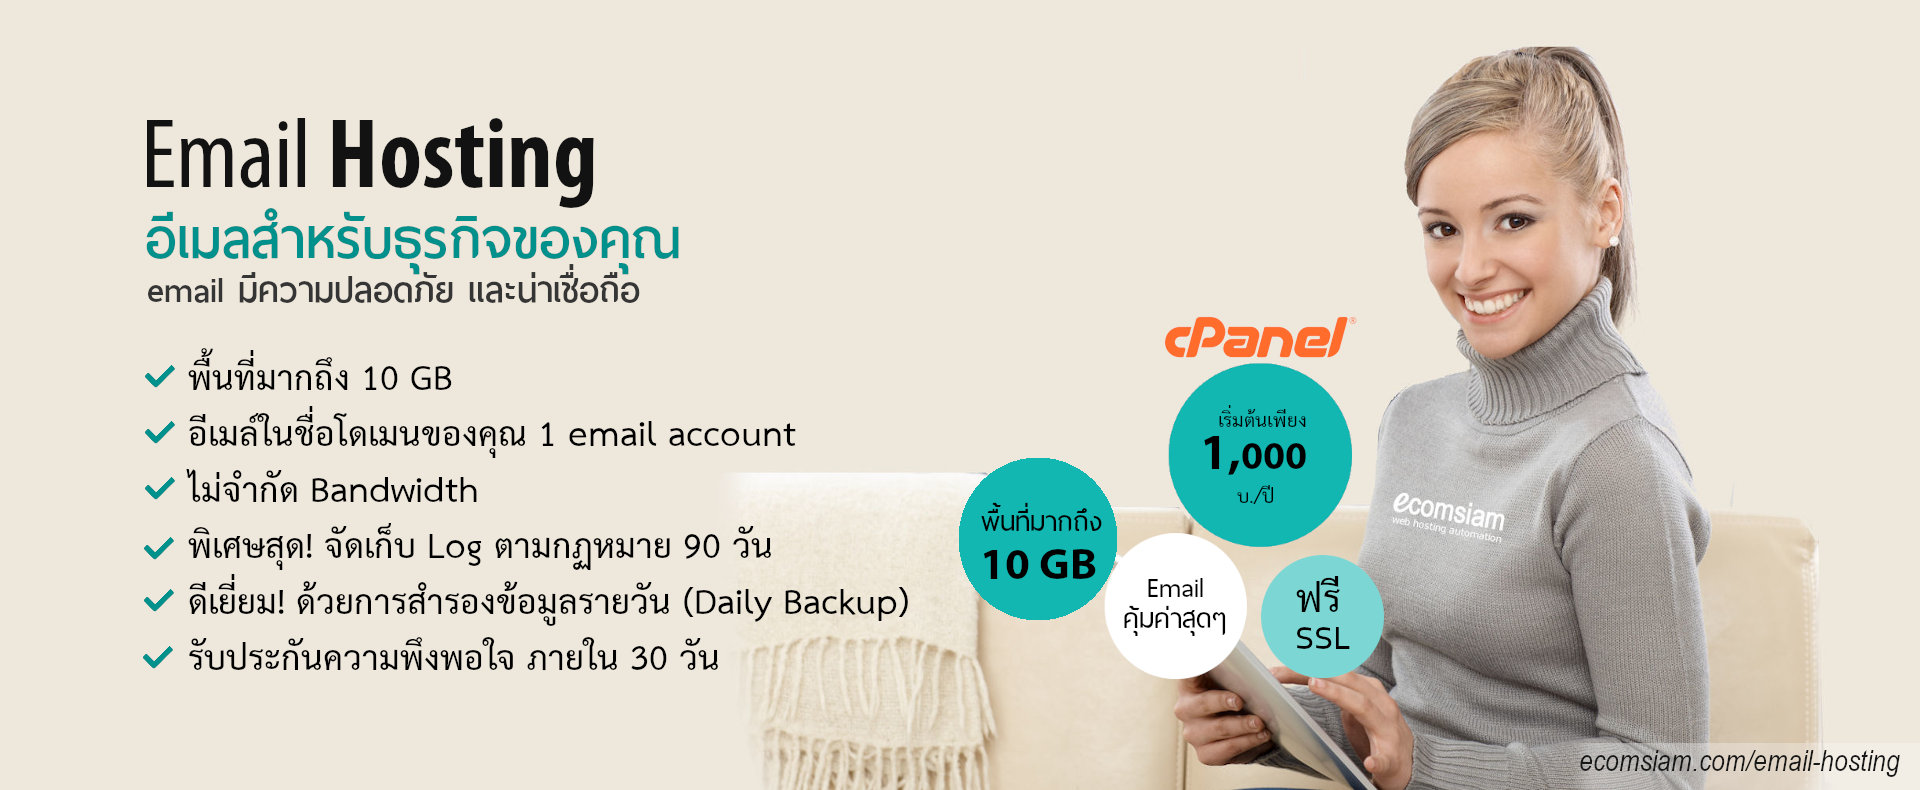 Email hosting thai ไทย - พื้นที่มากถึง 10 GB/1 email เพียง 1000 บาทต่อปี พร้อมใบรับรอง SSL